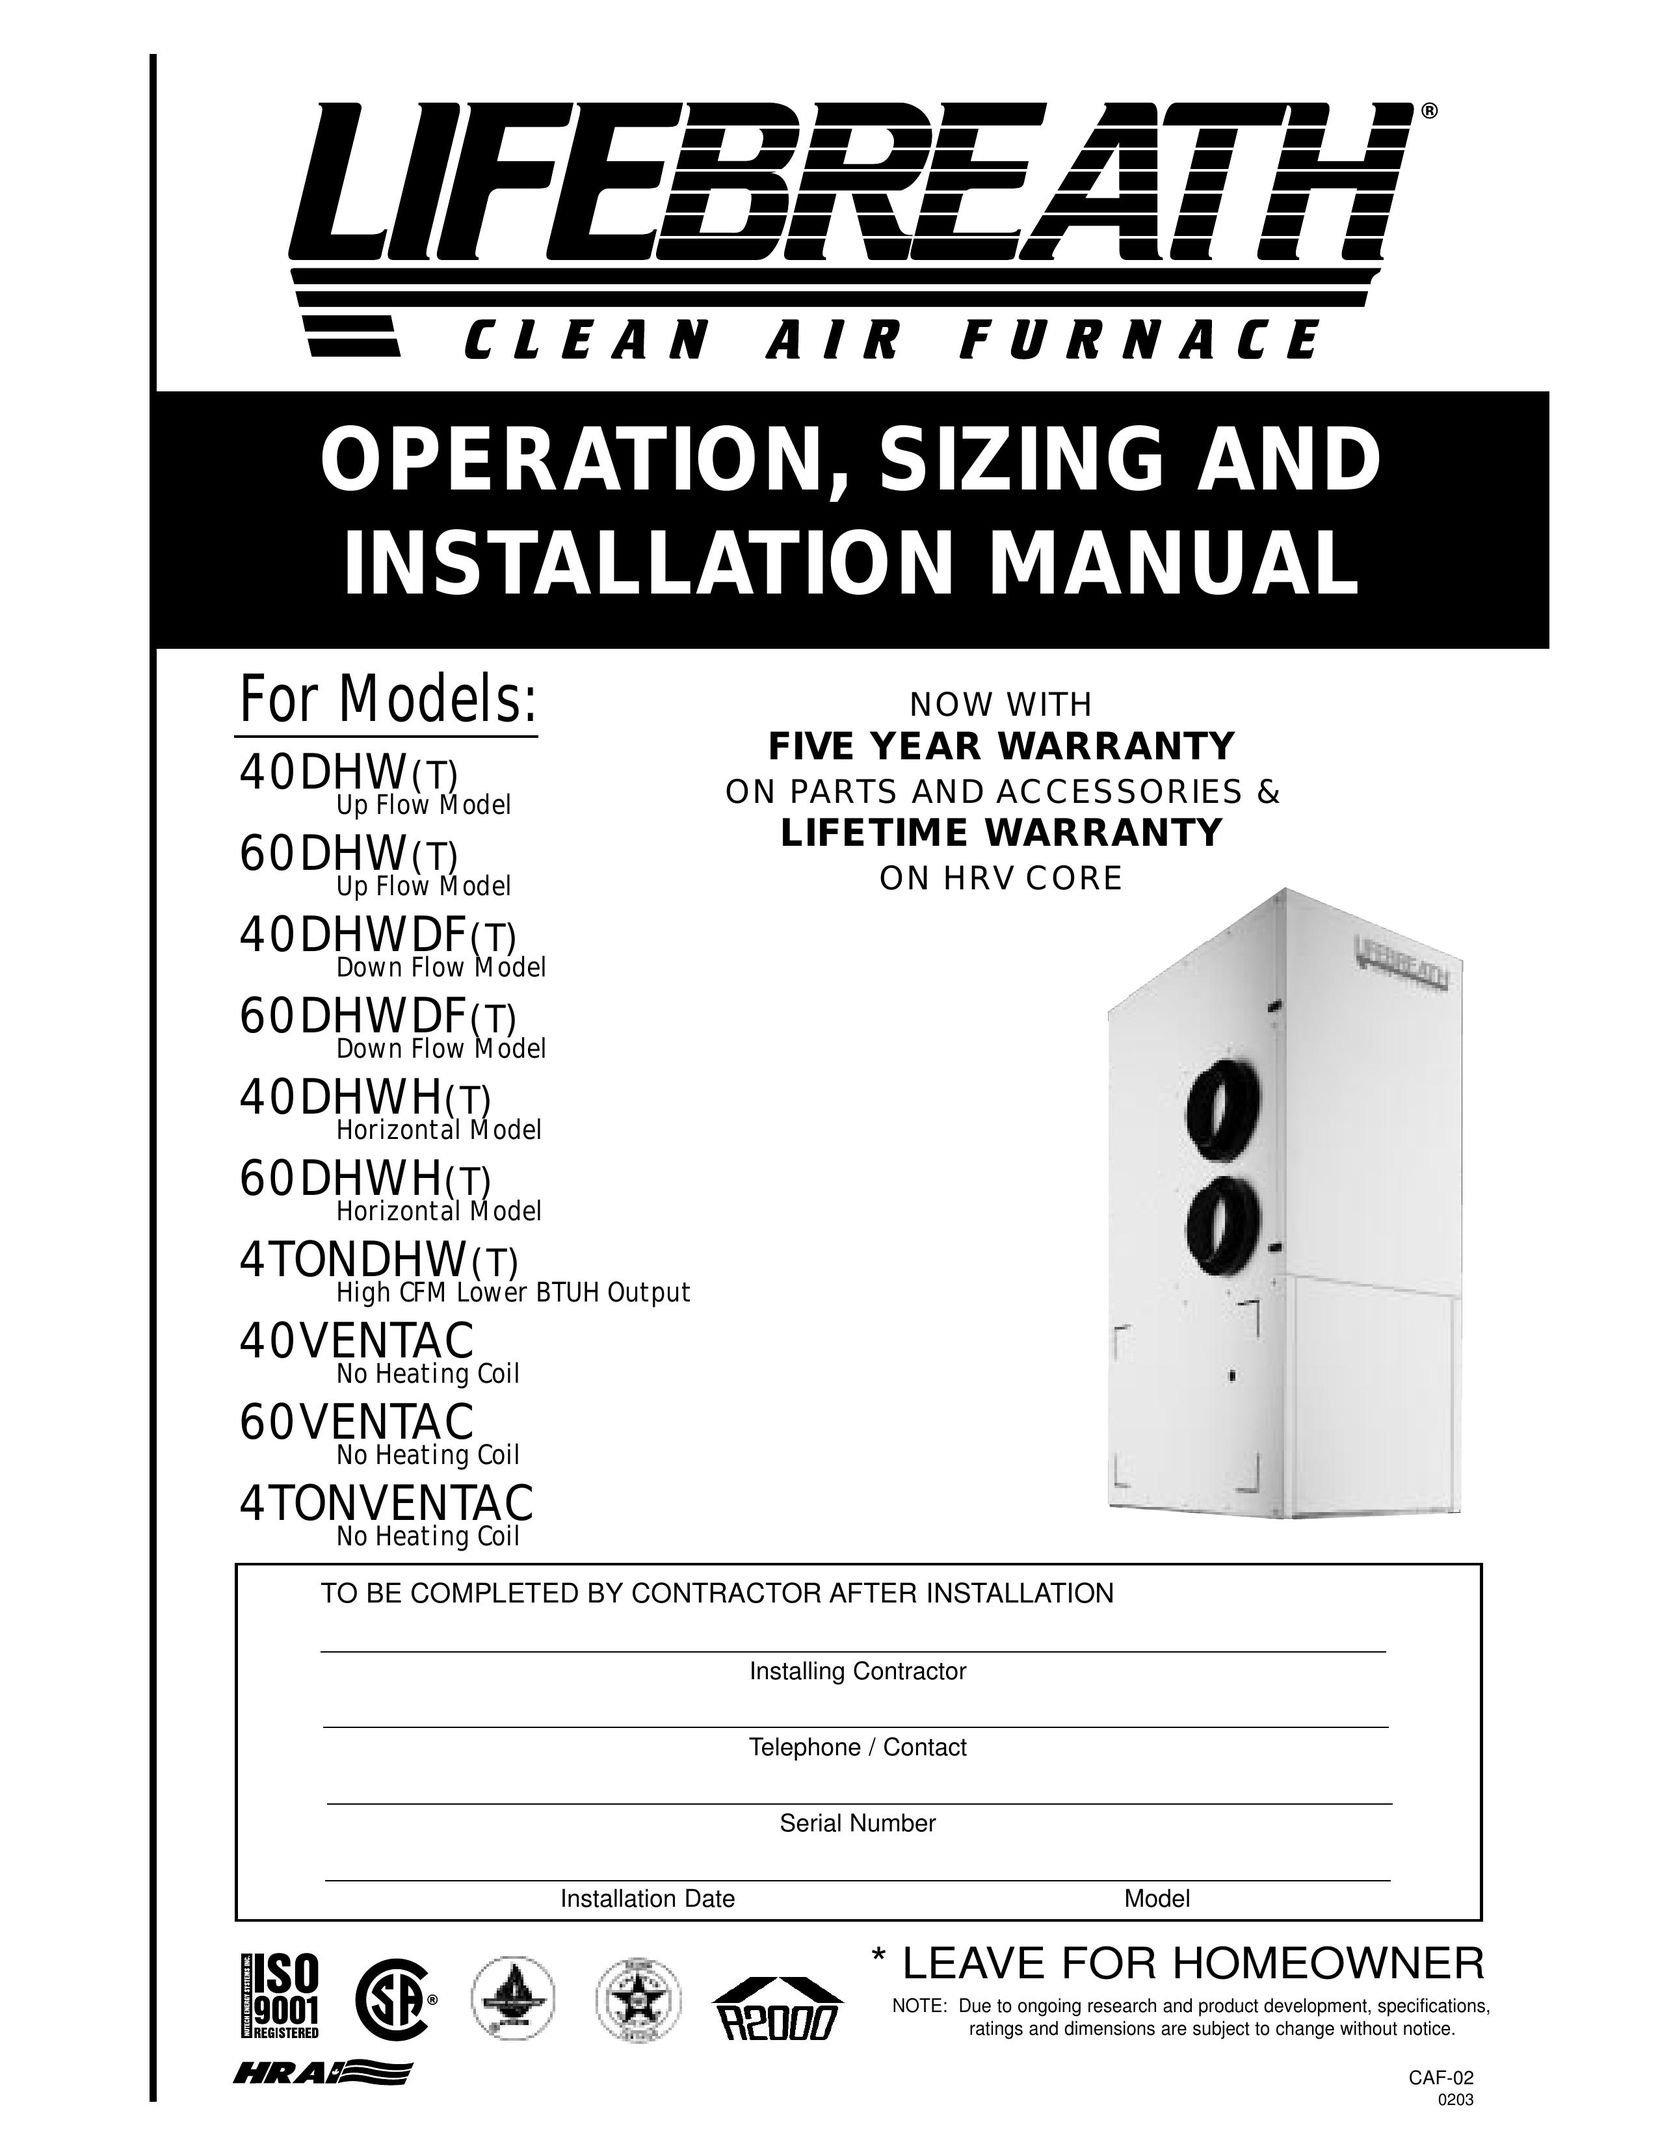 Lifebreath 4TONVENTAC Thermostat User Manual